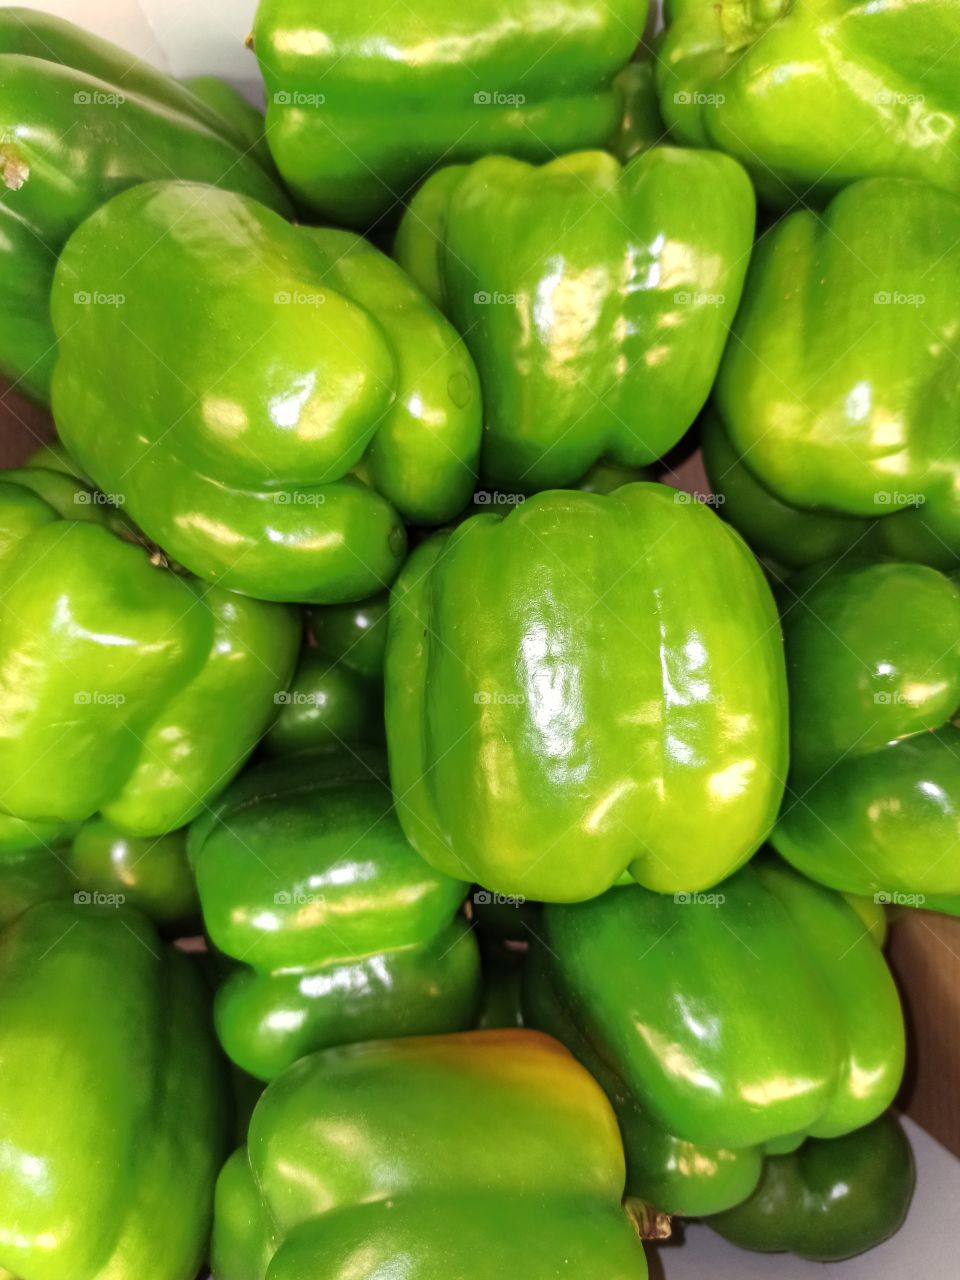 Crispy green bell peppers